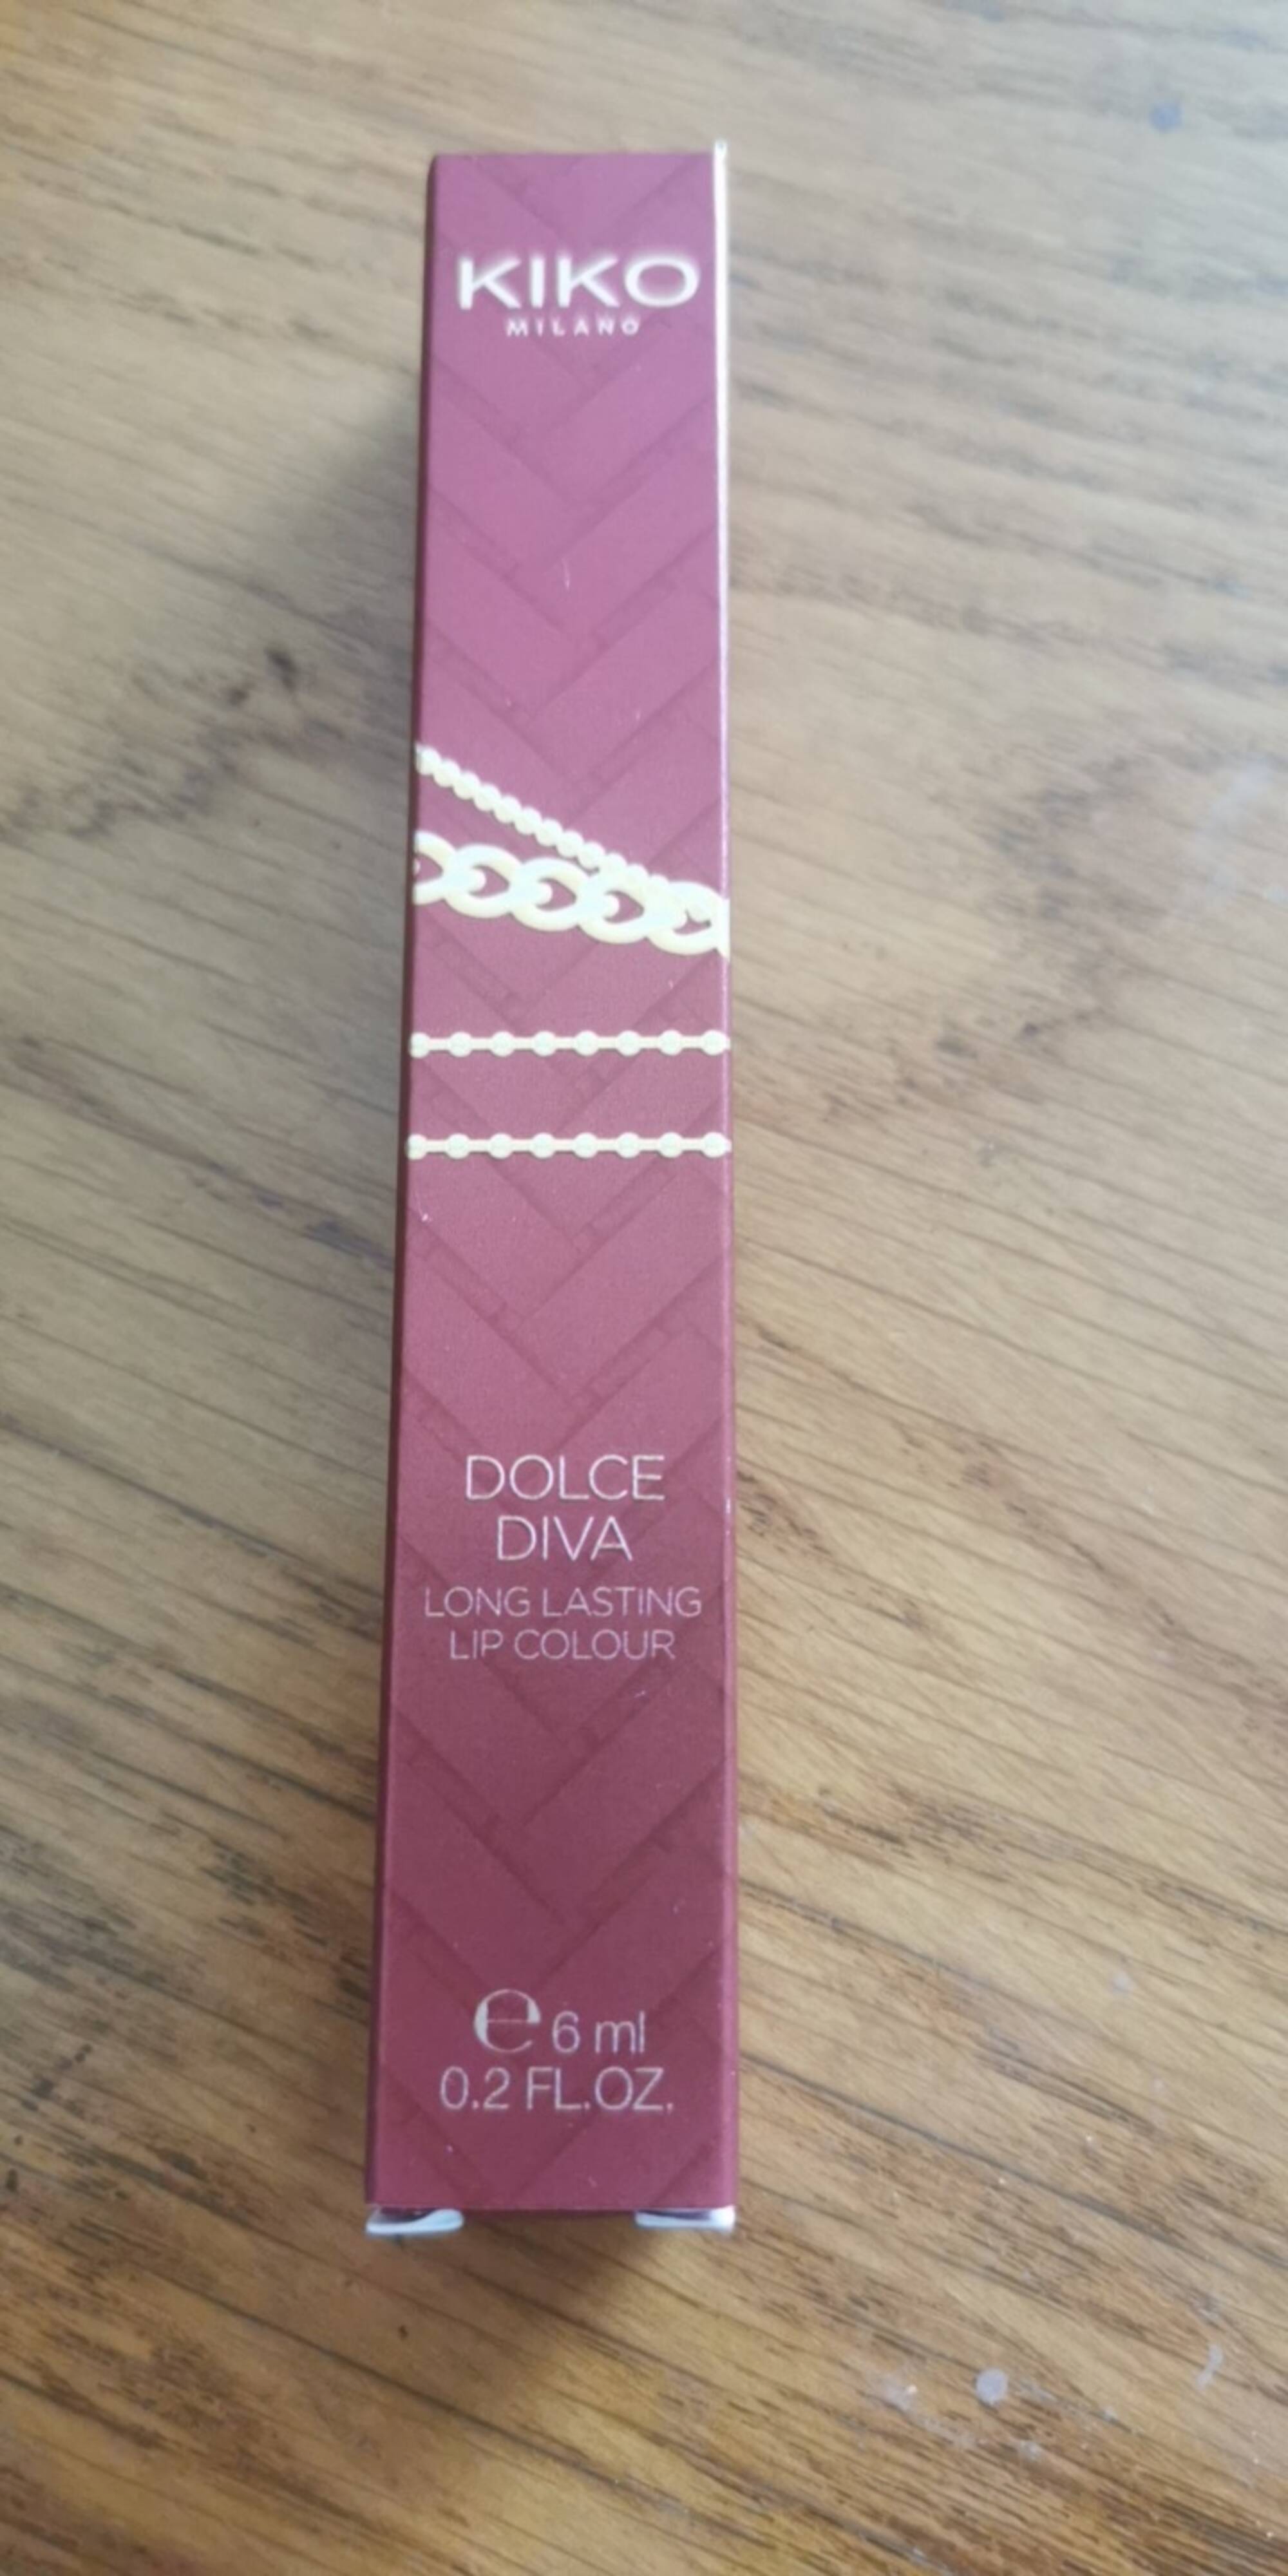 KIKO - Dolce diva - Long lasting lip colour